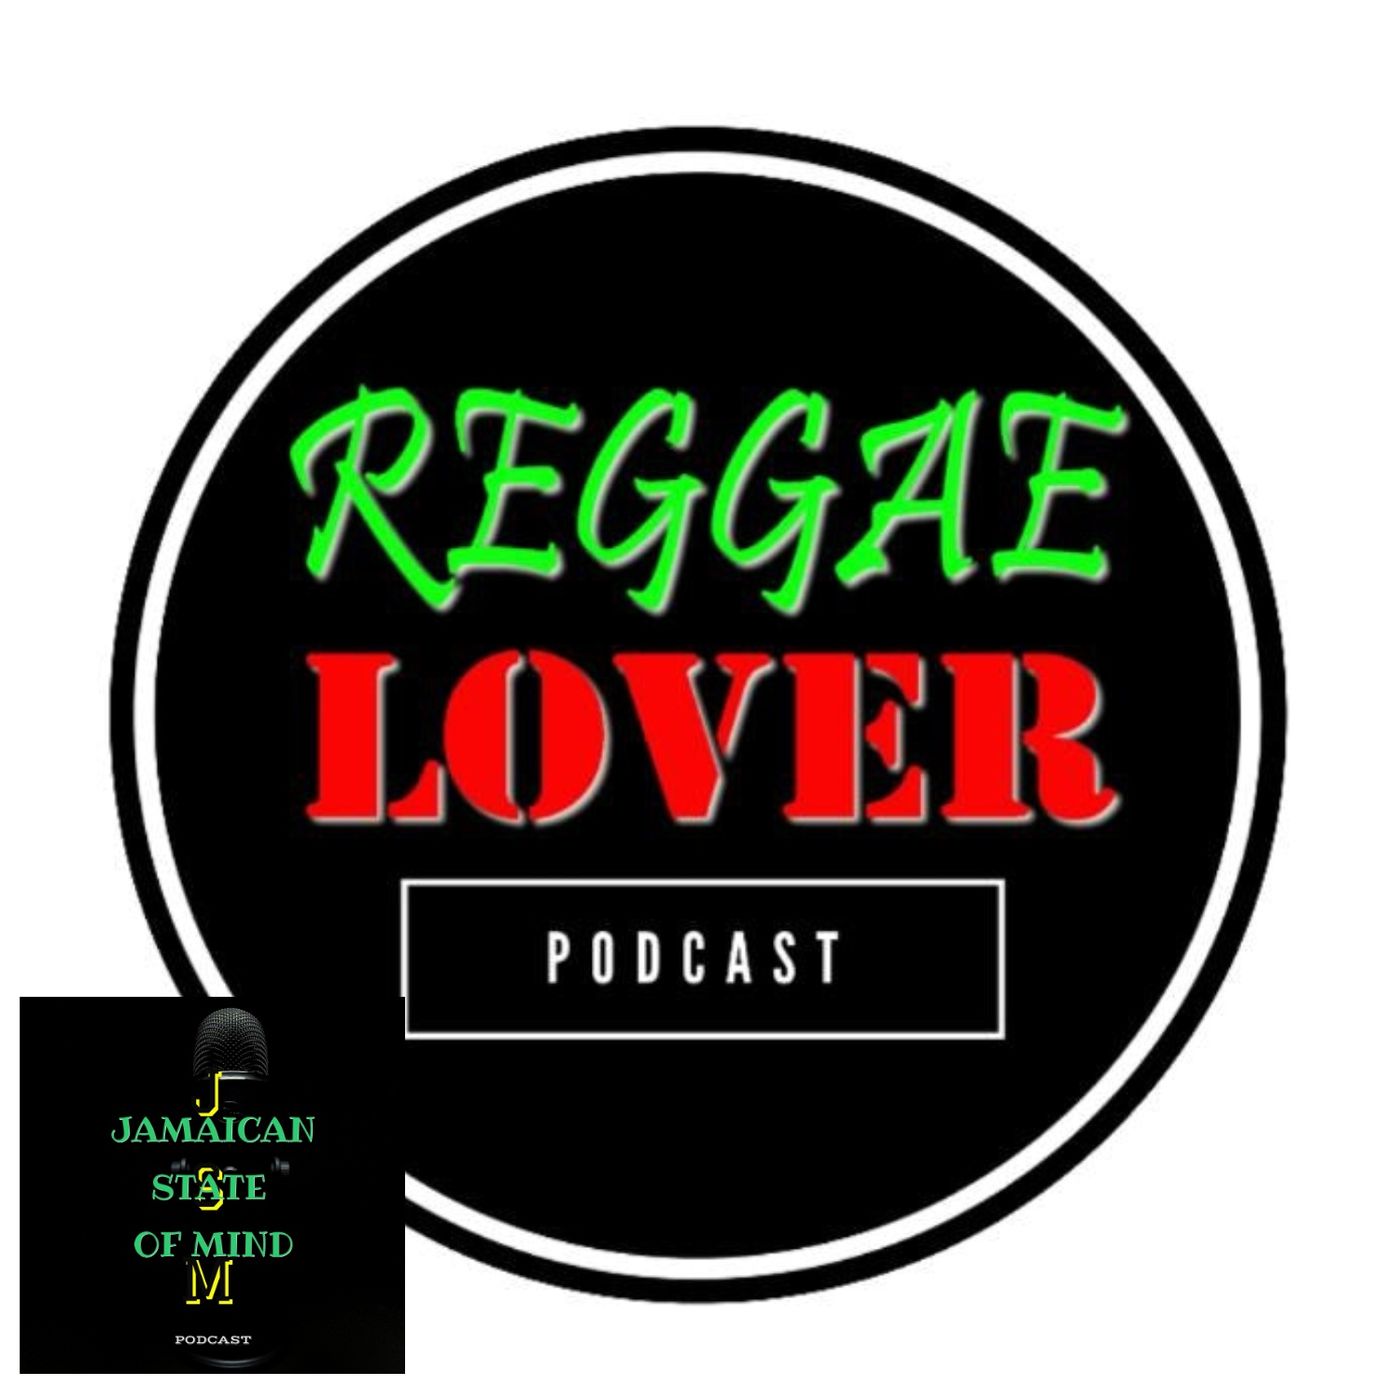 Reggae Lover pt2 with Kahlil & Agard